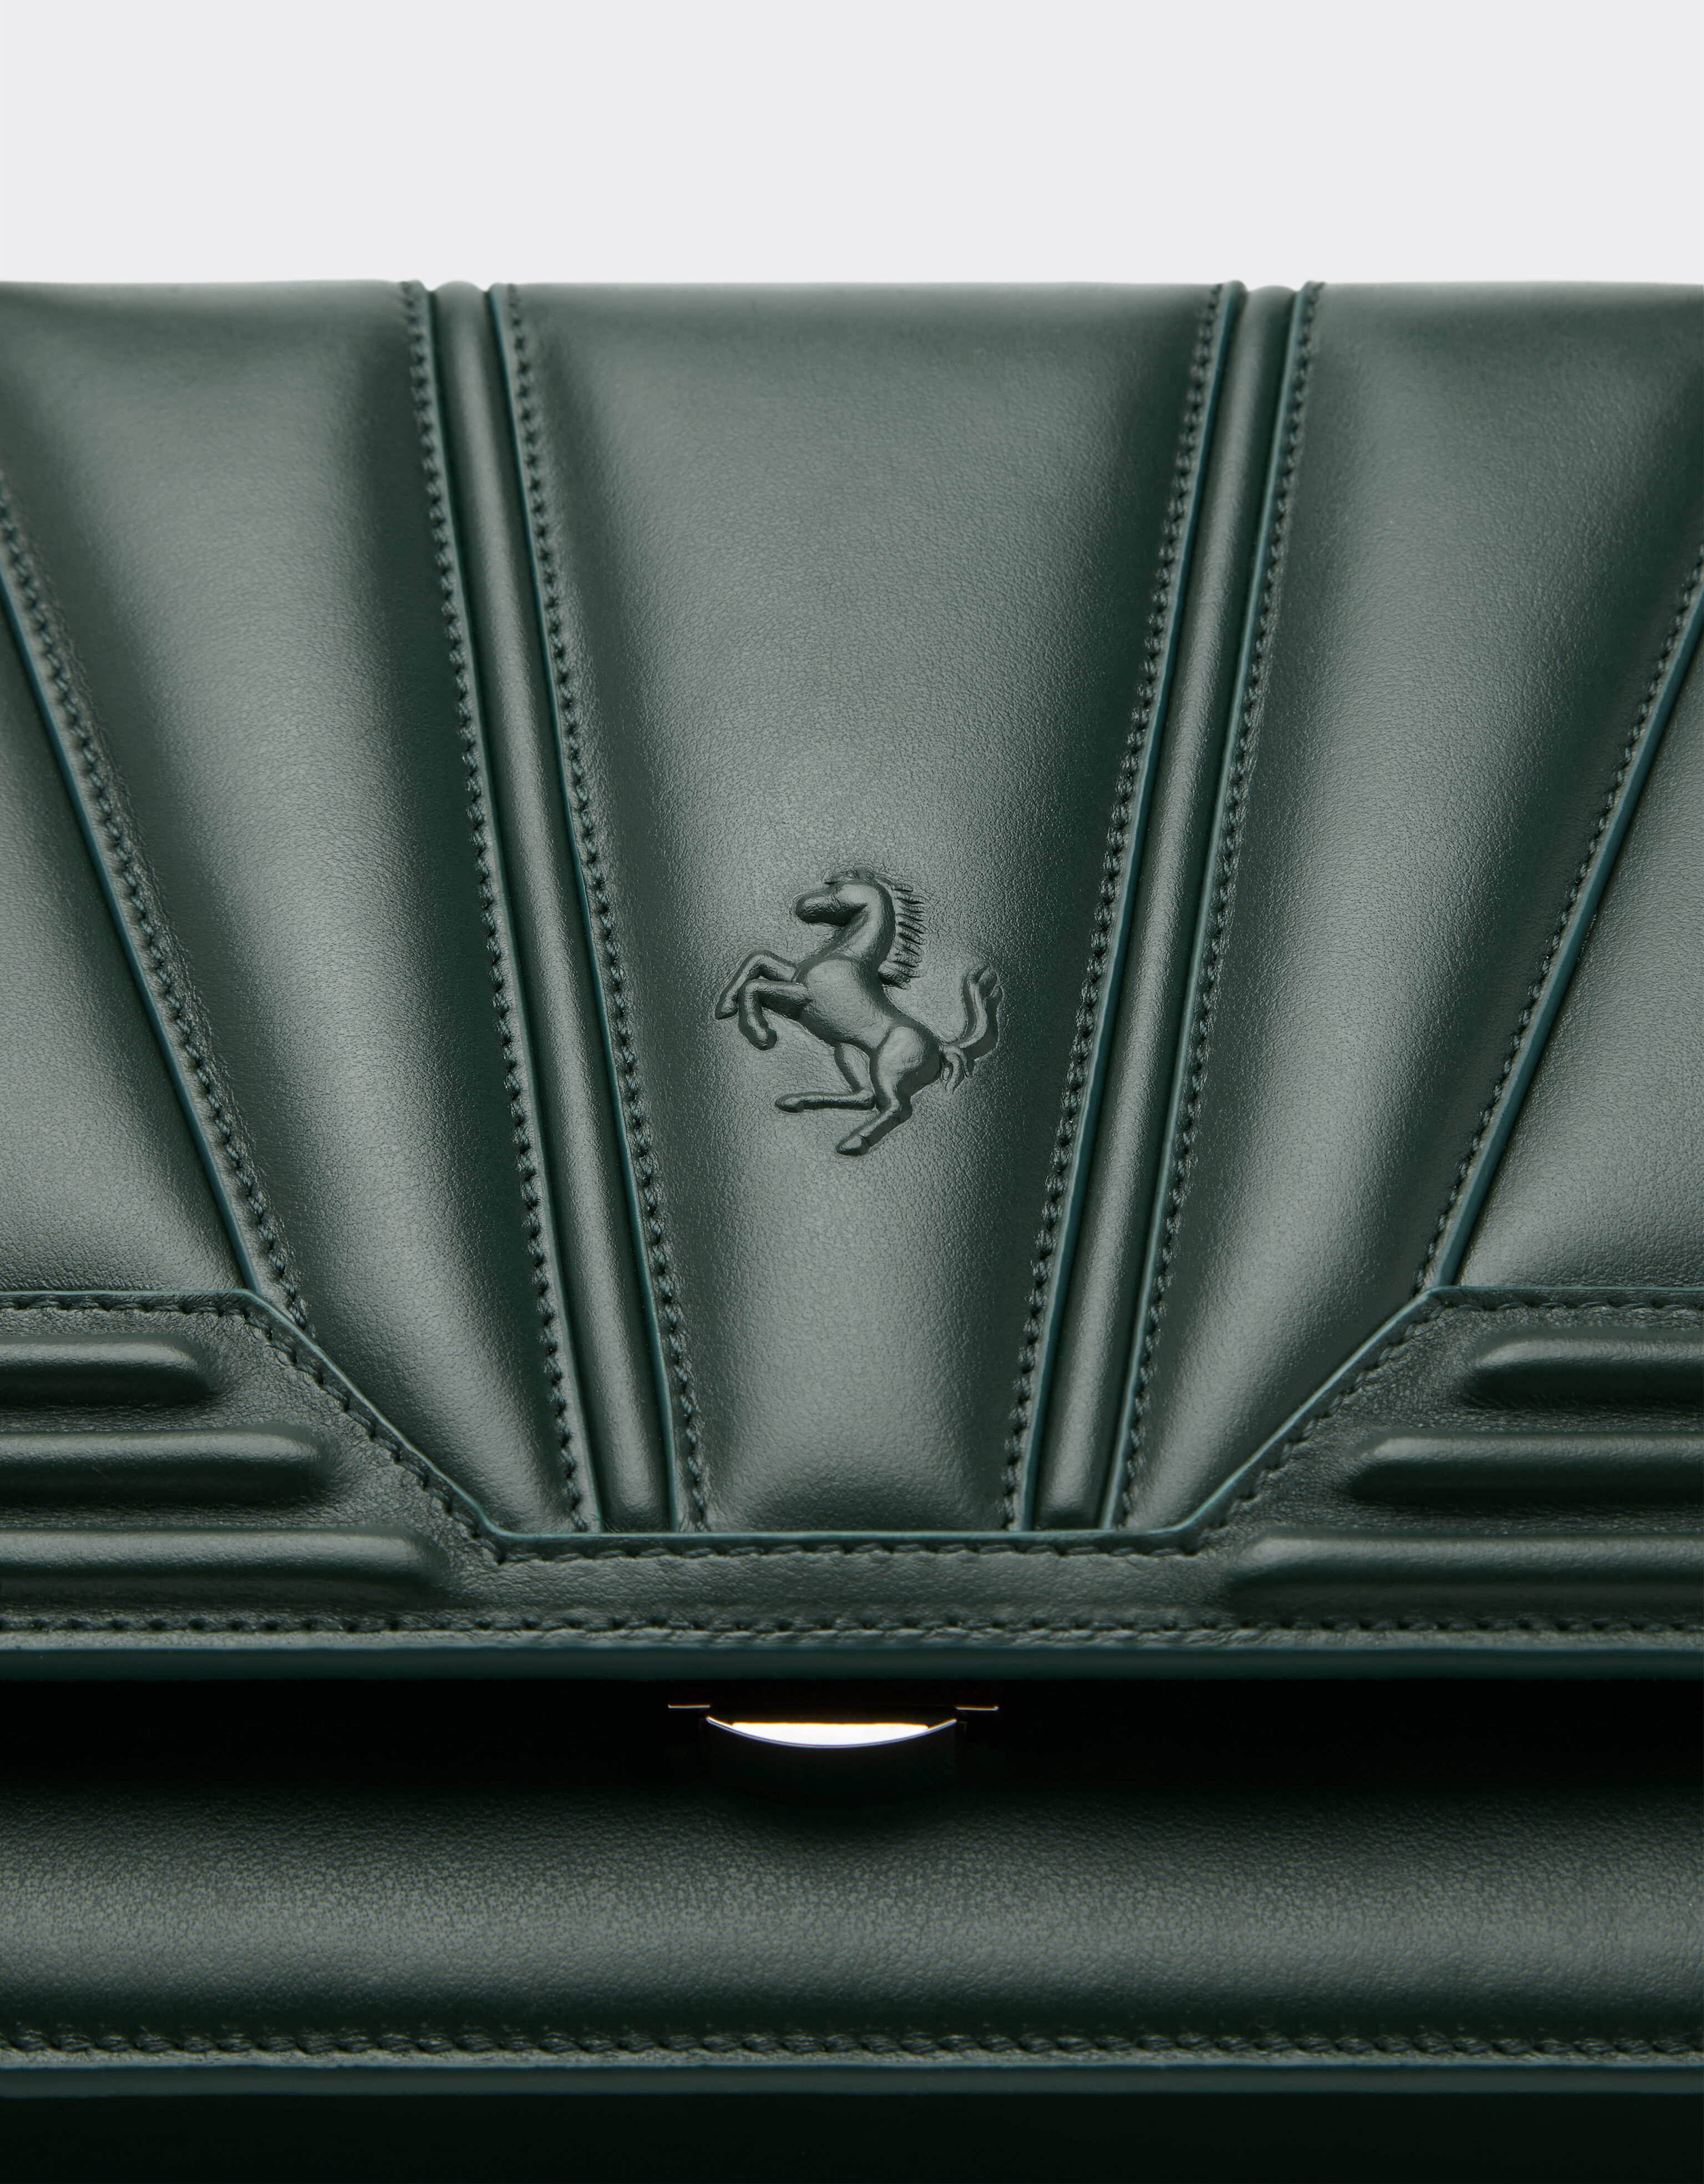 Ferrari 法拉利 GT Bag 3D 图案顶部手柄皮革手袋 深绿色 20324f